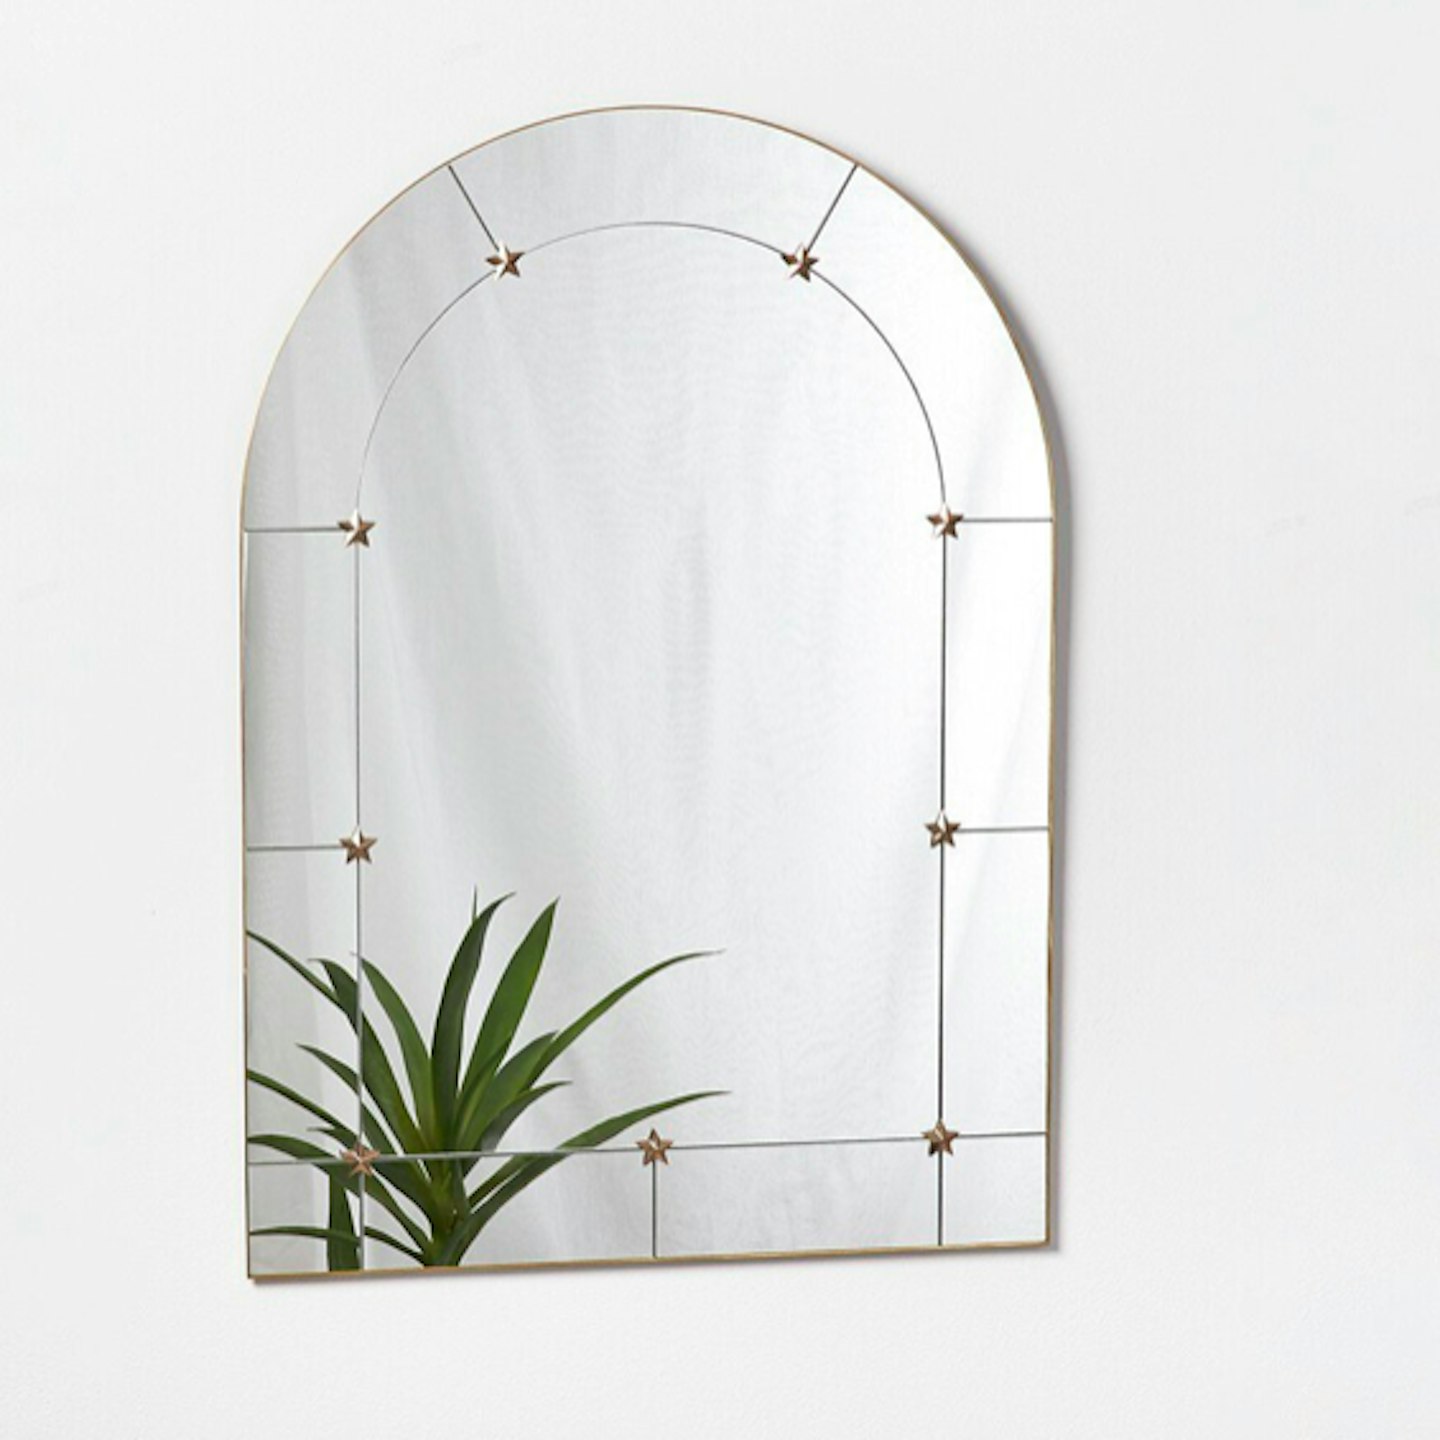 Oliver Bonas, Gold Star Window Pane Mirror Medium, £145